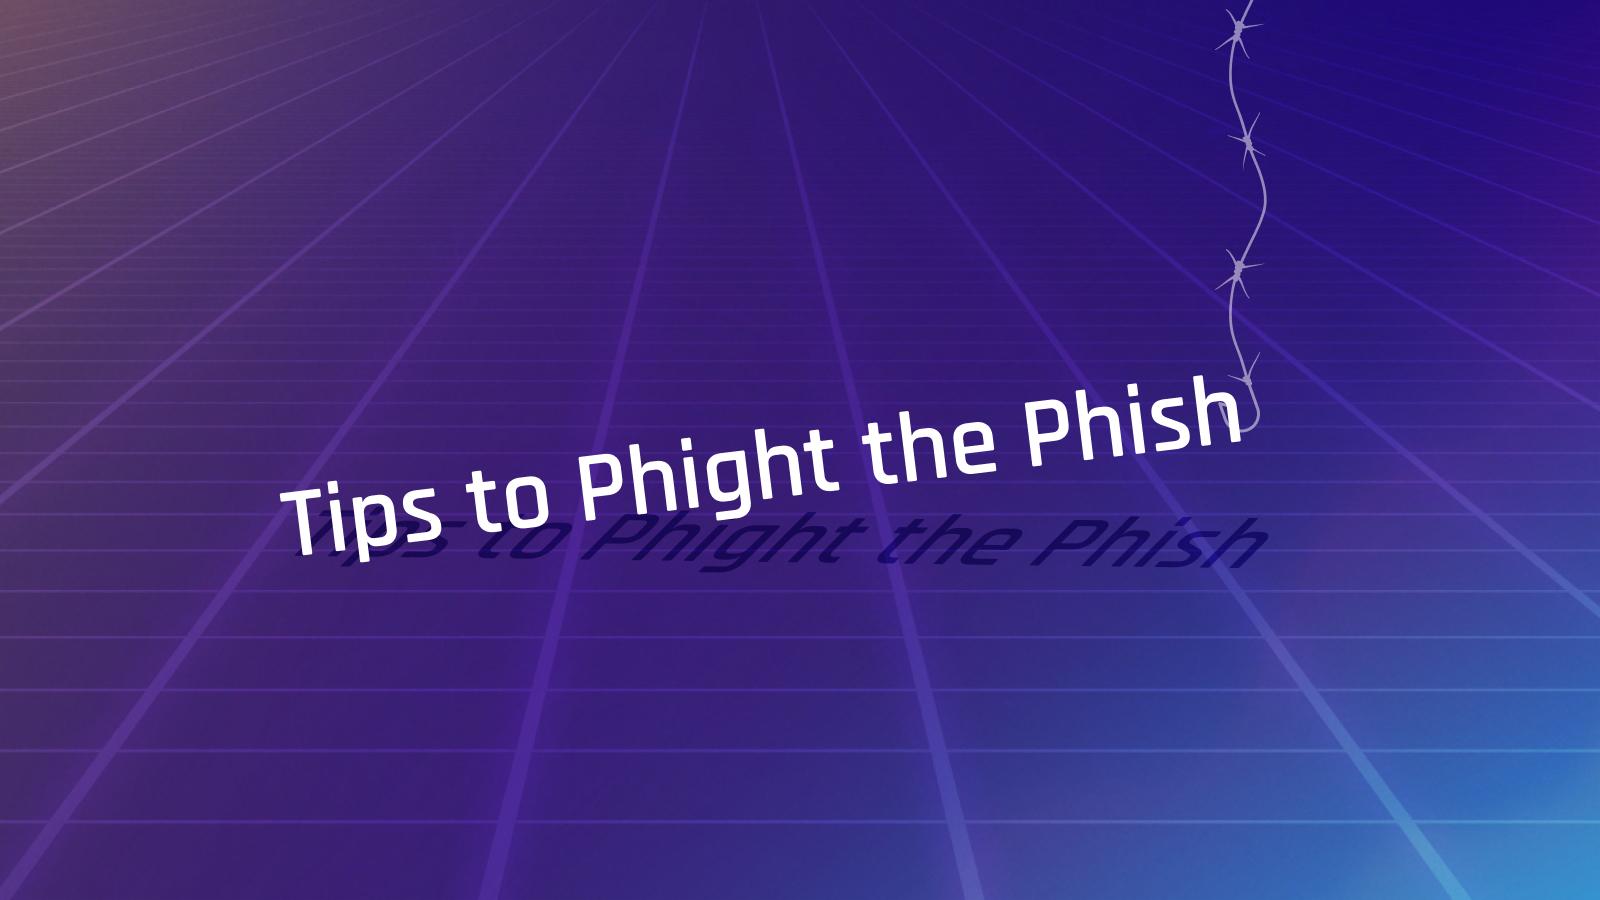 Phight the Phish: Best Practices for Phishing Prevention